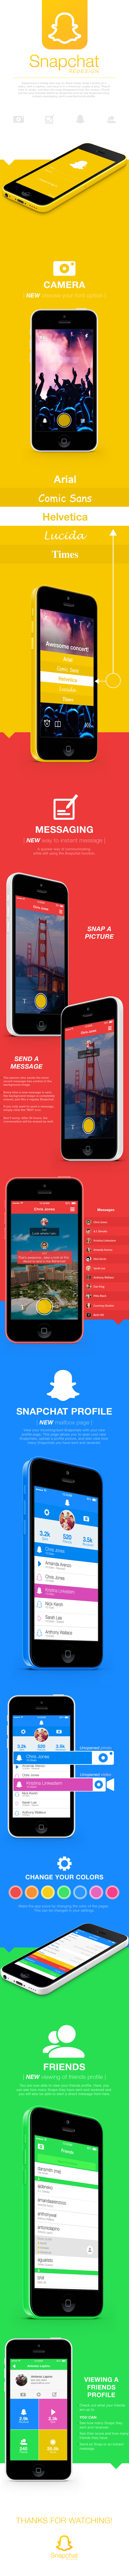 graphic design interactive UI ux ios iphone apple snapchat SnapchatRedesign redesign